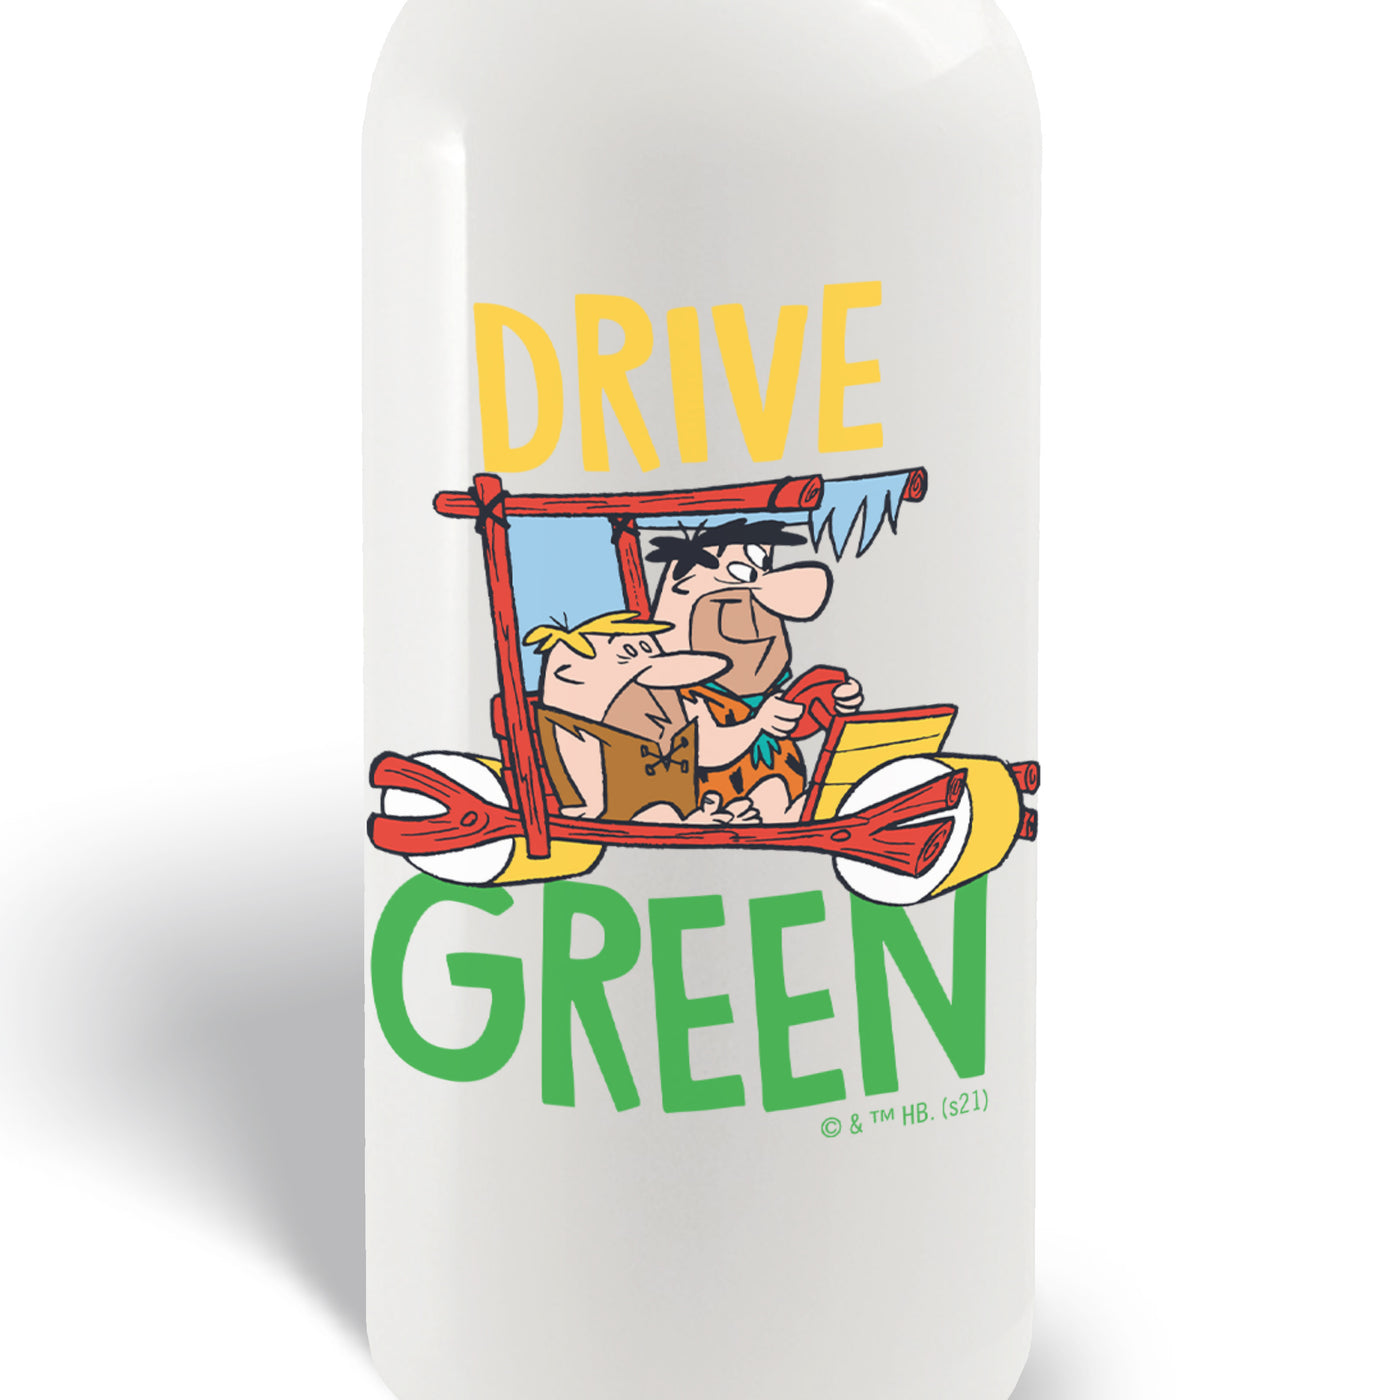 The Flintstones Let's Rock Drive Green 20 oz Screw Top Water Bottle with Straw